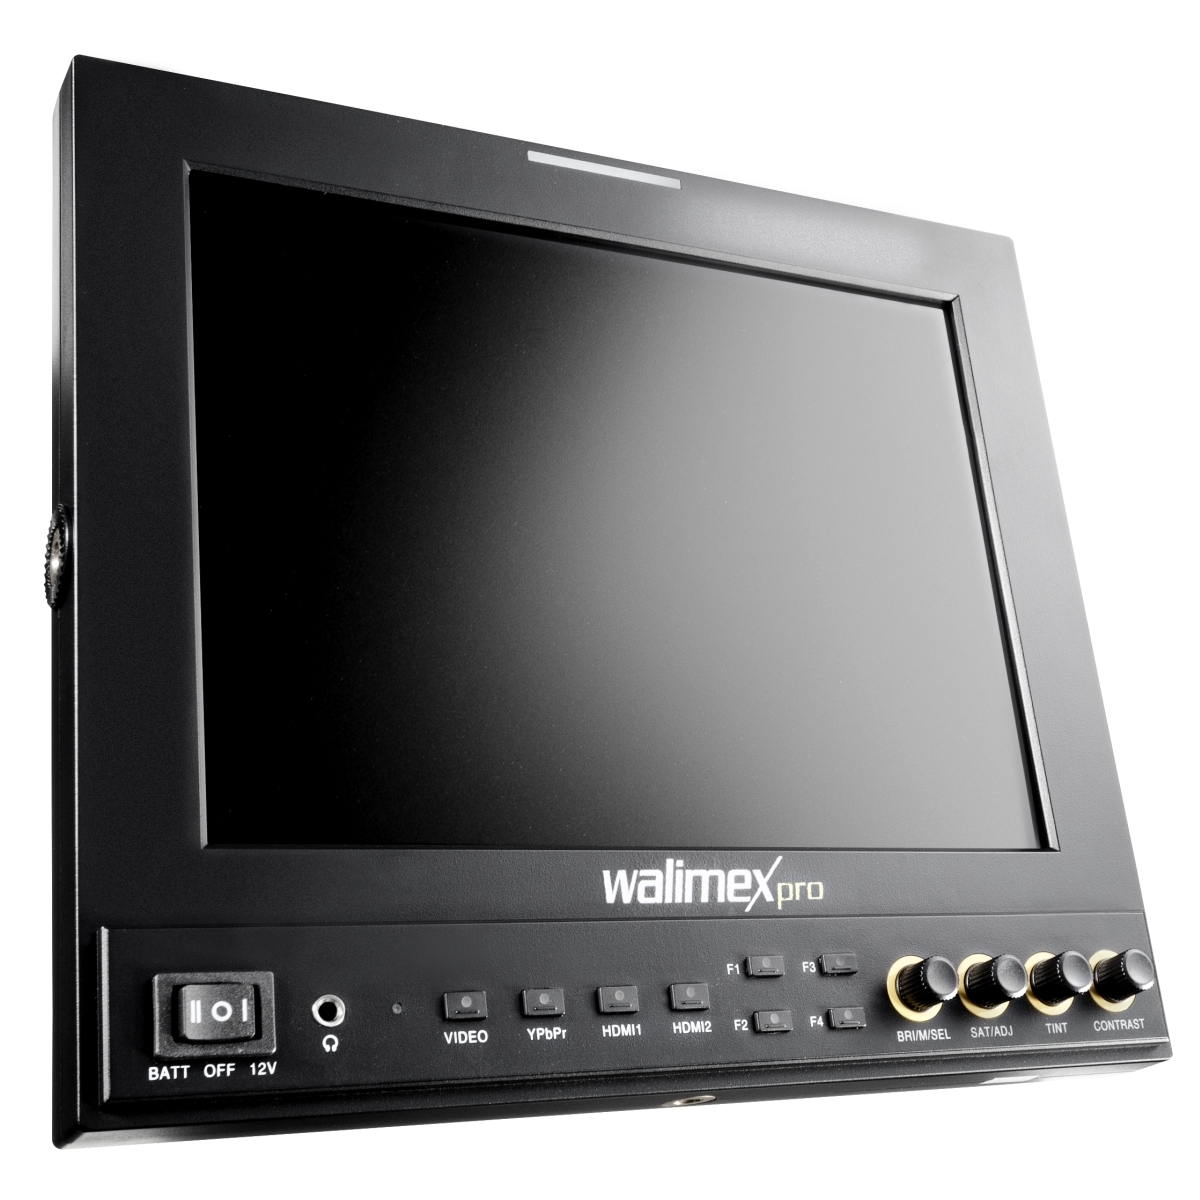 Walimex pro LCD Monitor Director II 24,6cm (9,7)